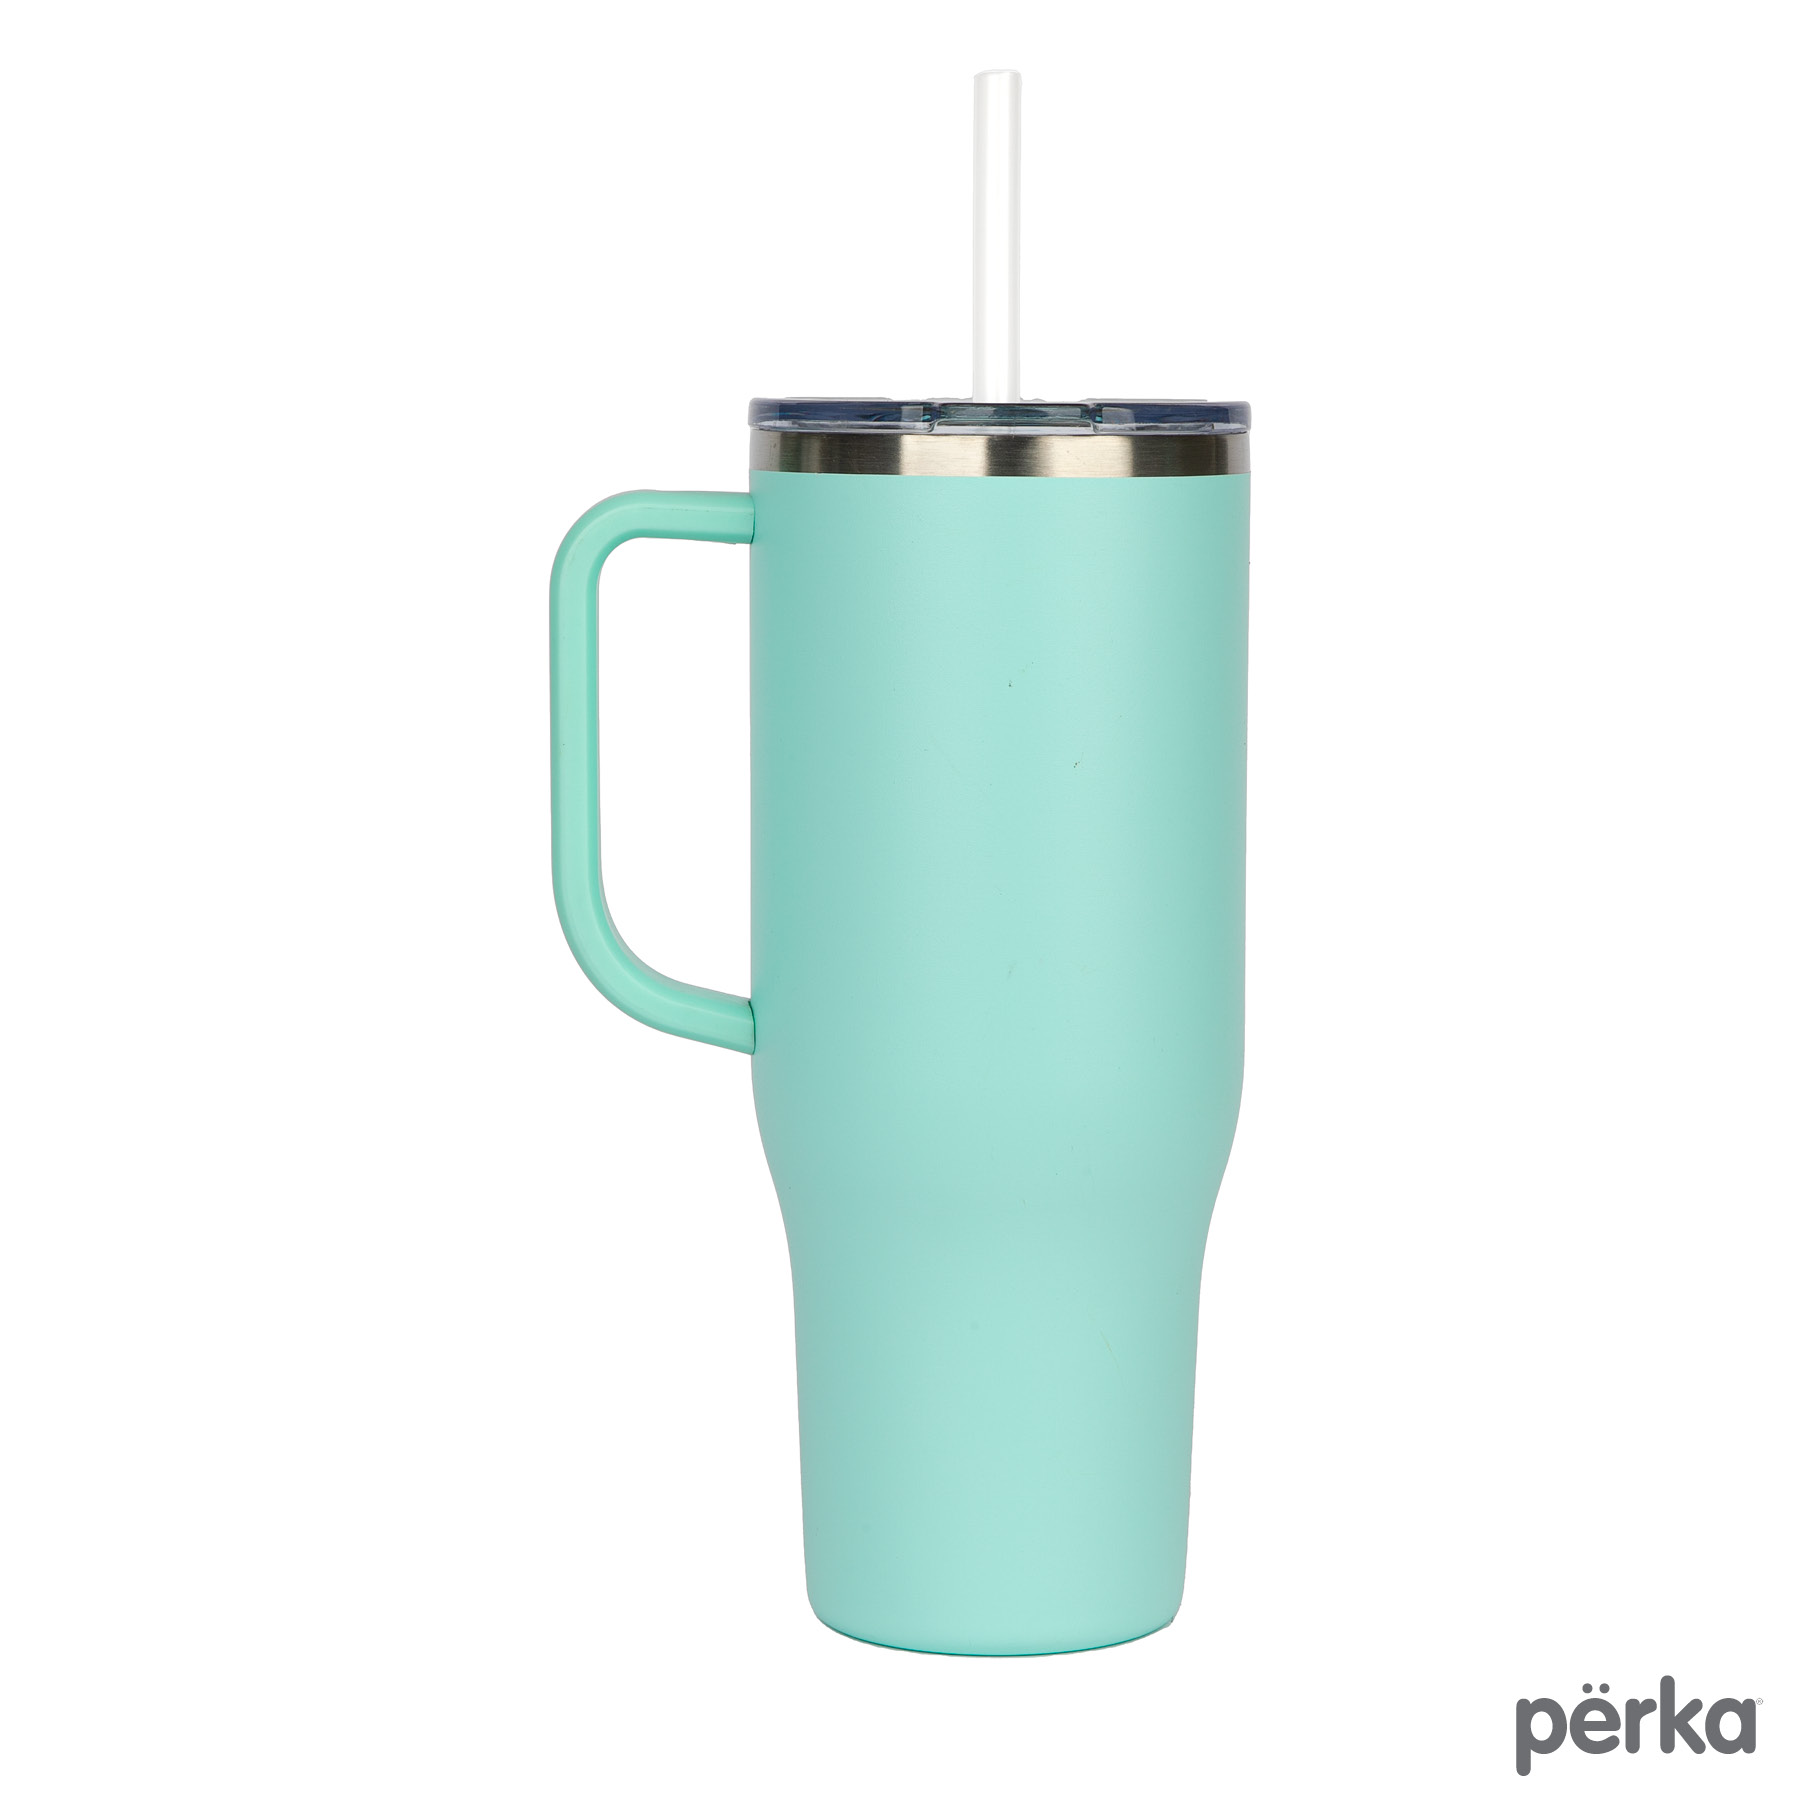 Perka® KM8416 - Kempton 40 oz. Double Wall Stainless Steel Travel Mug